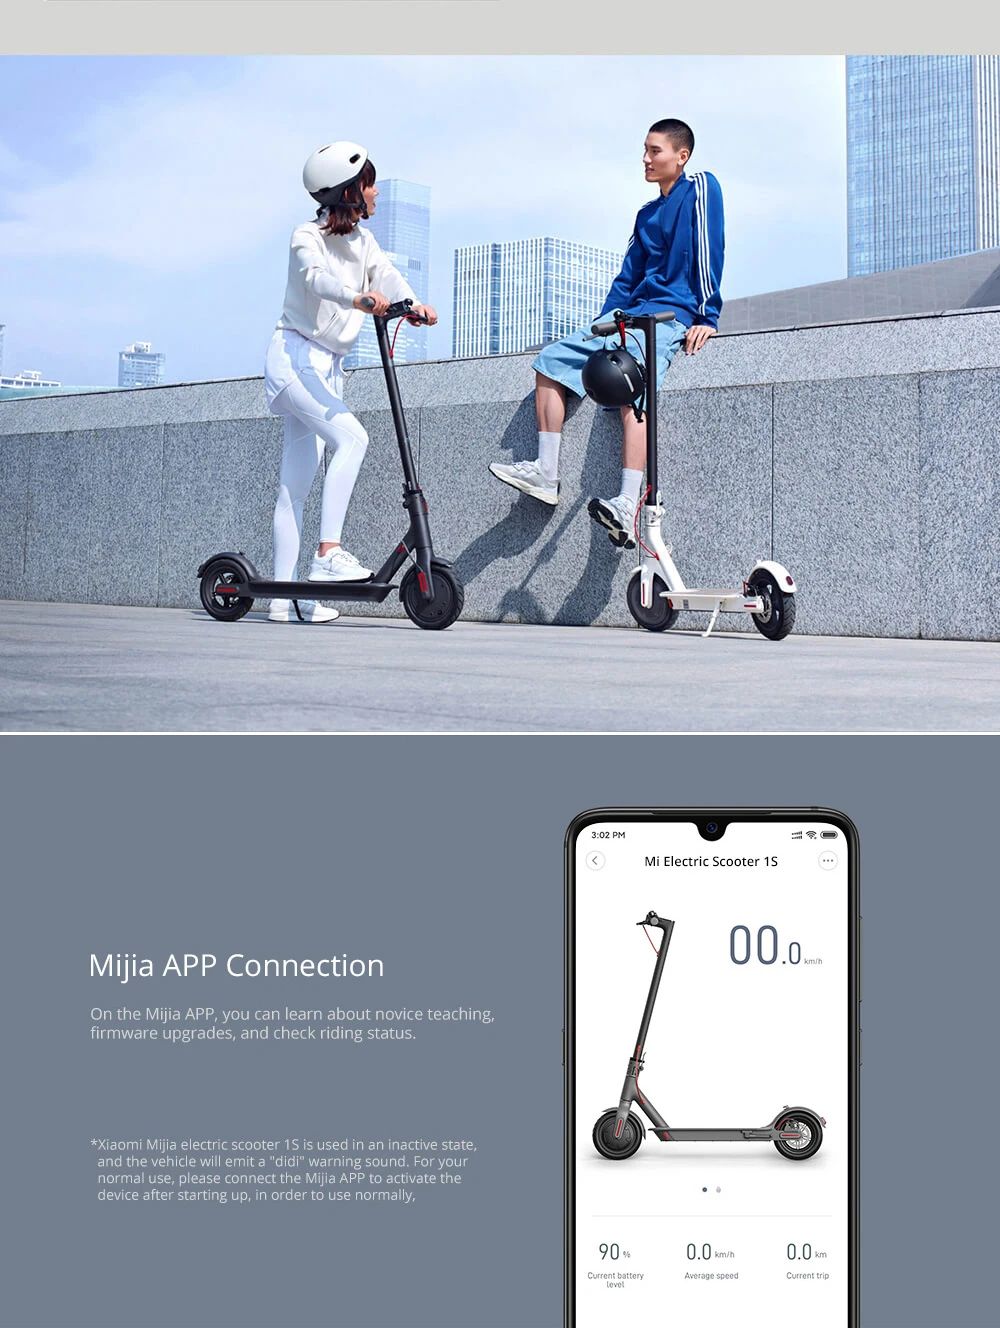 Xiaomi_Mi_Electric_Scooter_1S